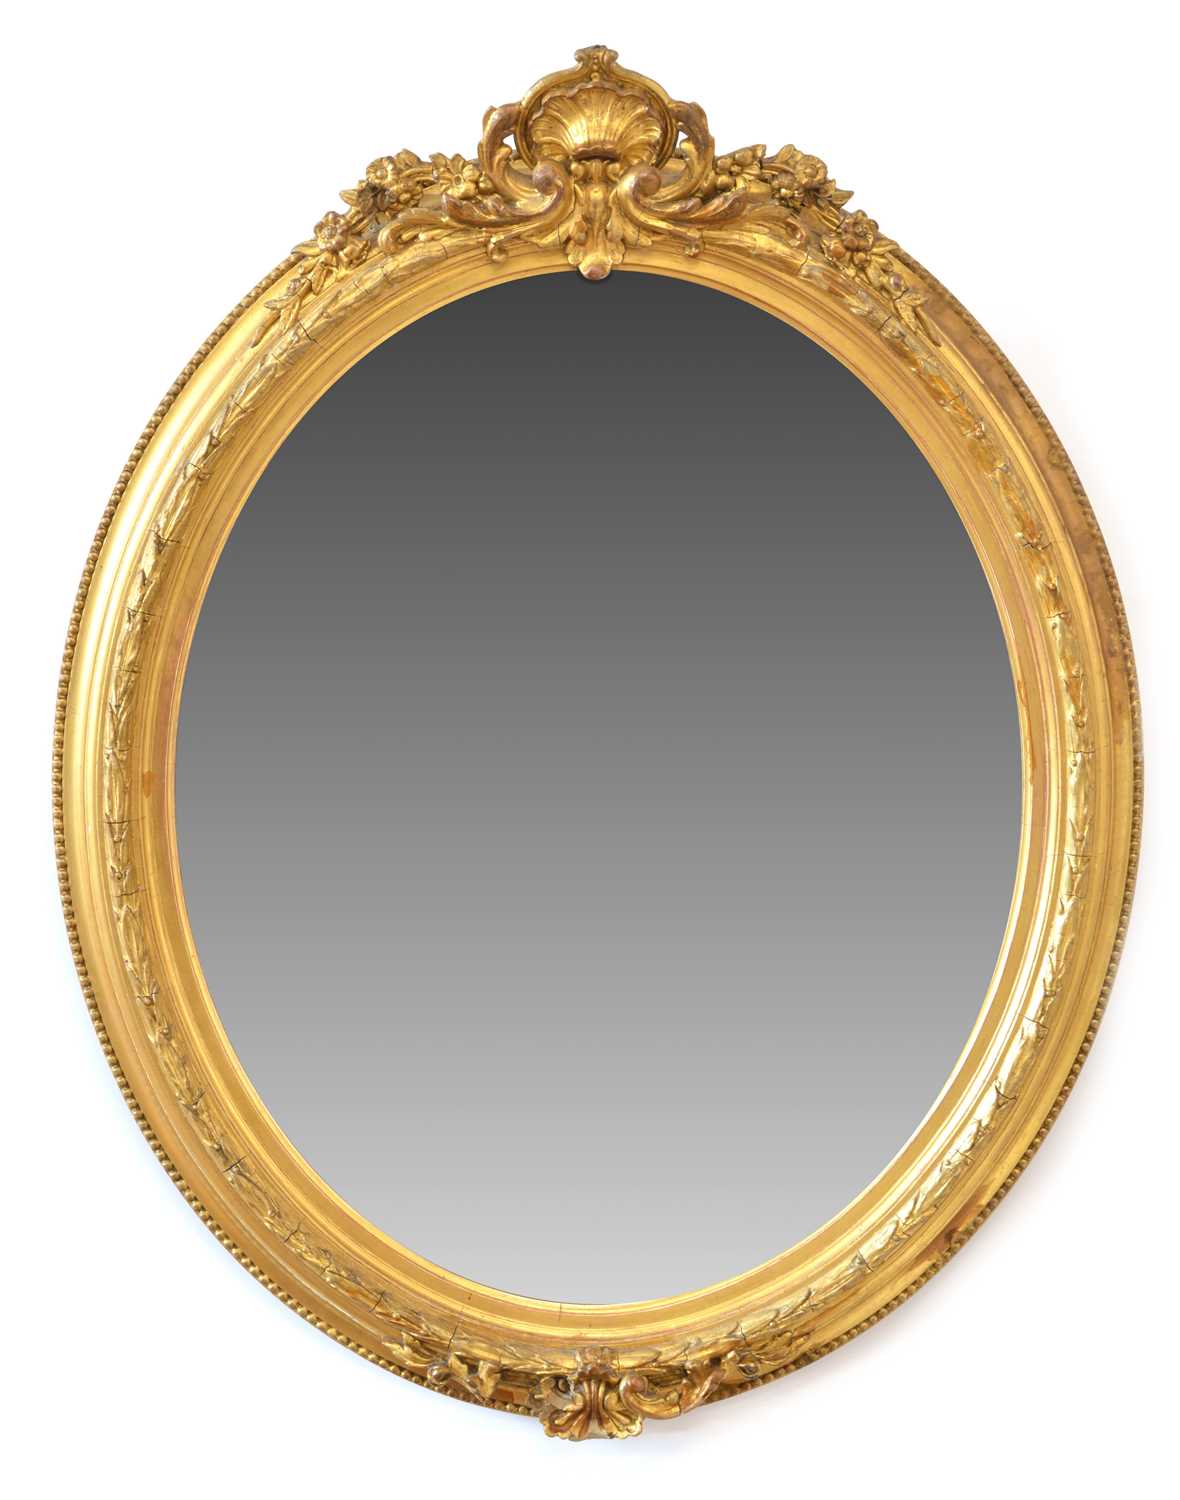 Lot 246 - Gilt Oval Wall Mirror